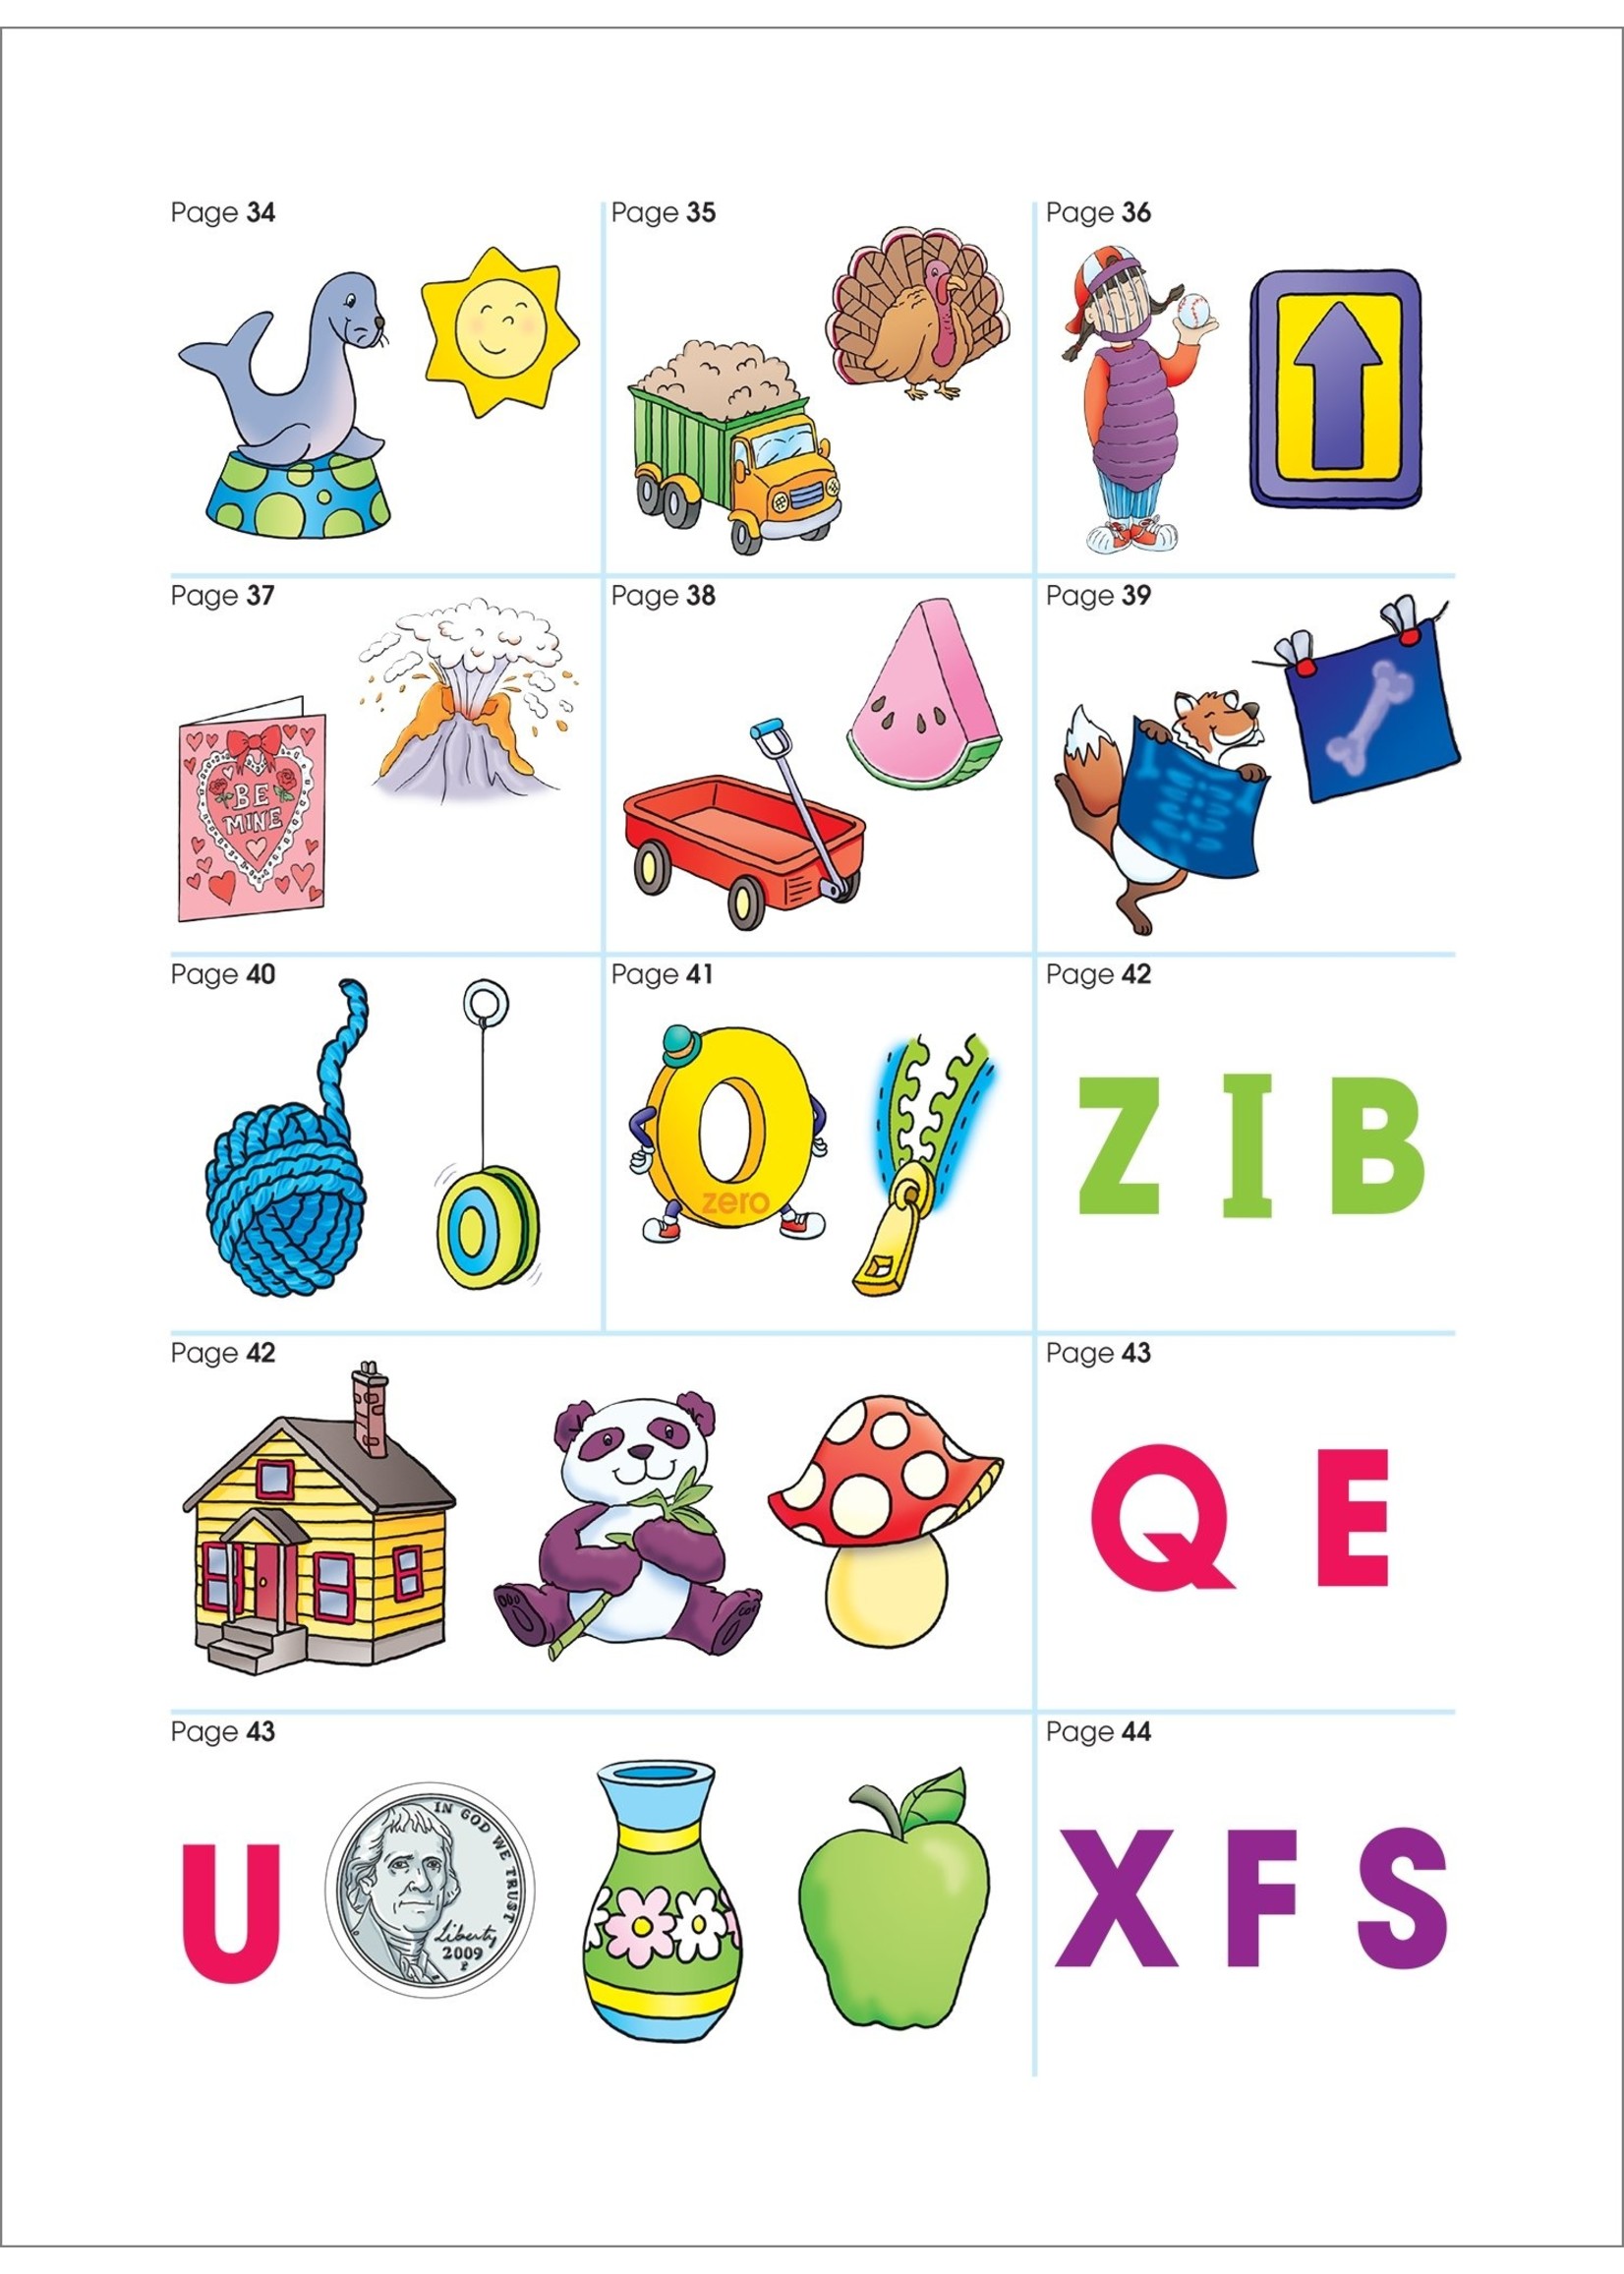 School Zone Publishing Company Alphabet Stickers